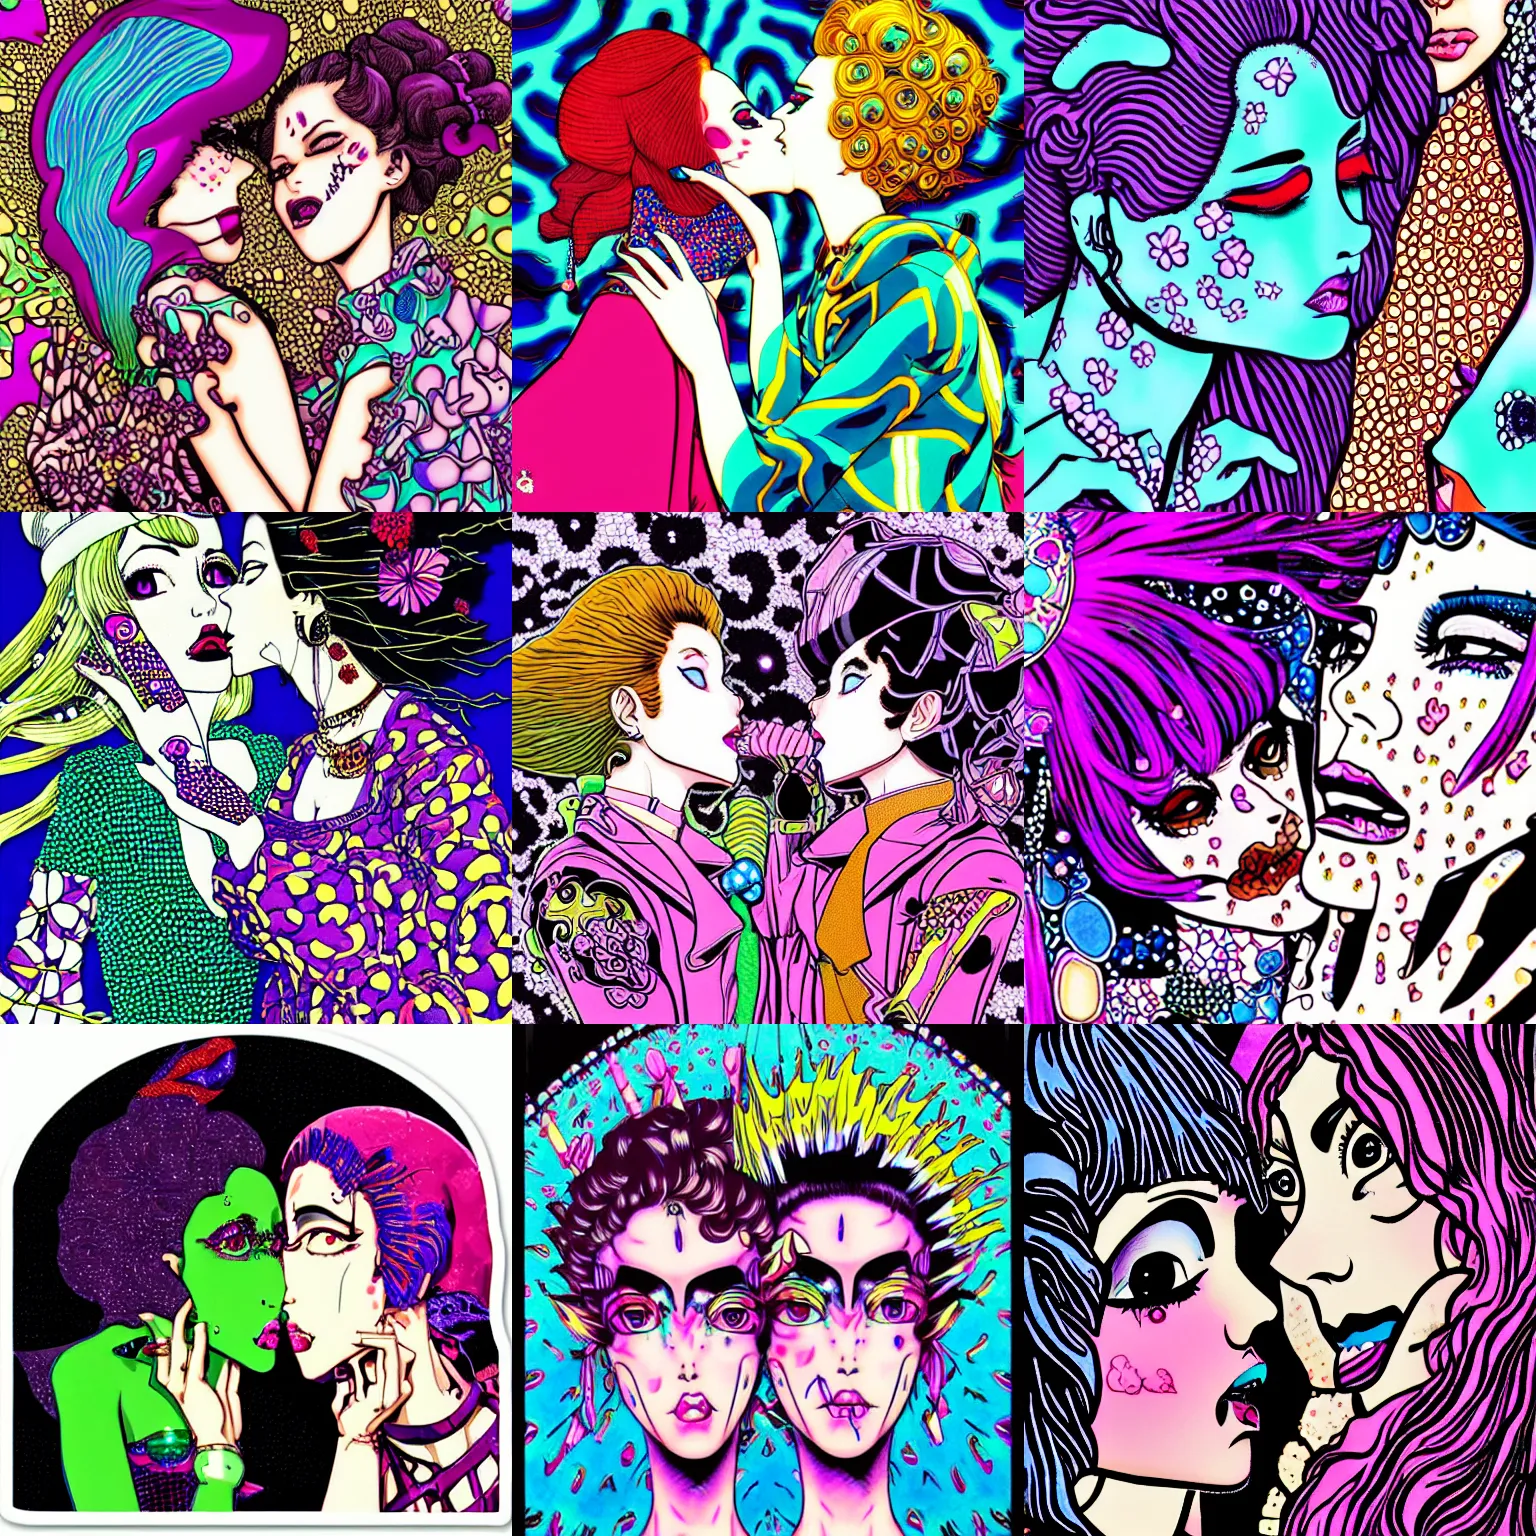 Prompt: Close-up of two trippy women Stands kissing by Hirohiko Araki, high fashion, psychedelic illustration, dark art, Jojo manga key visual, sticker illustration